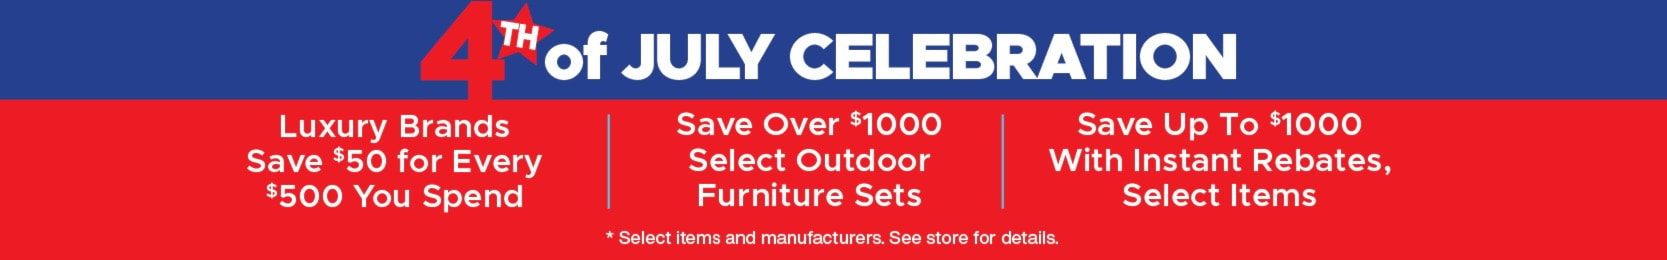 4th of july celebration, savings on furniture